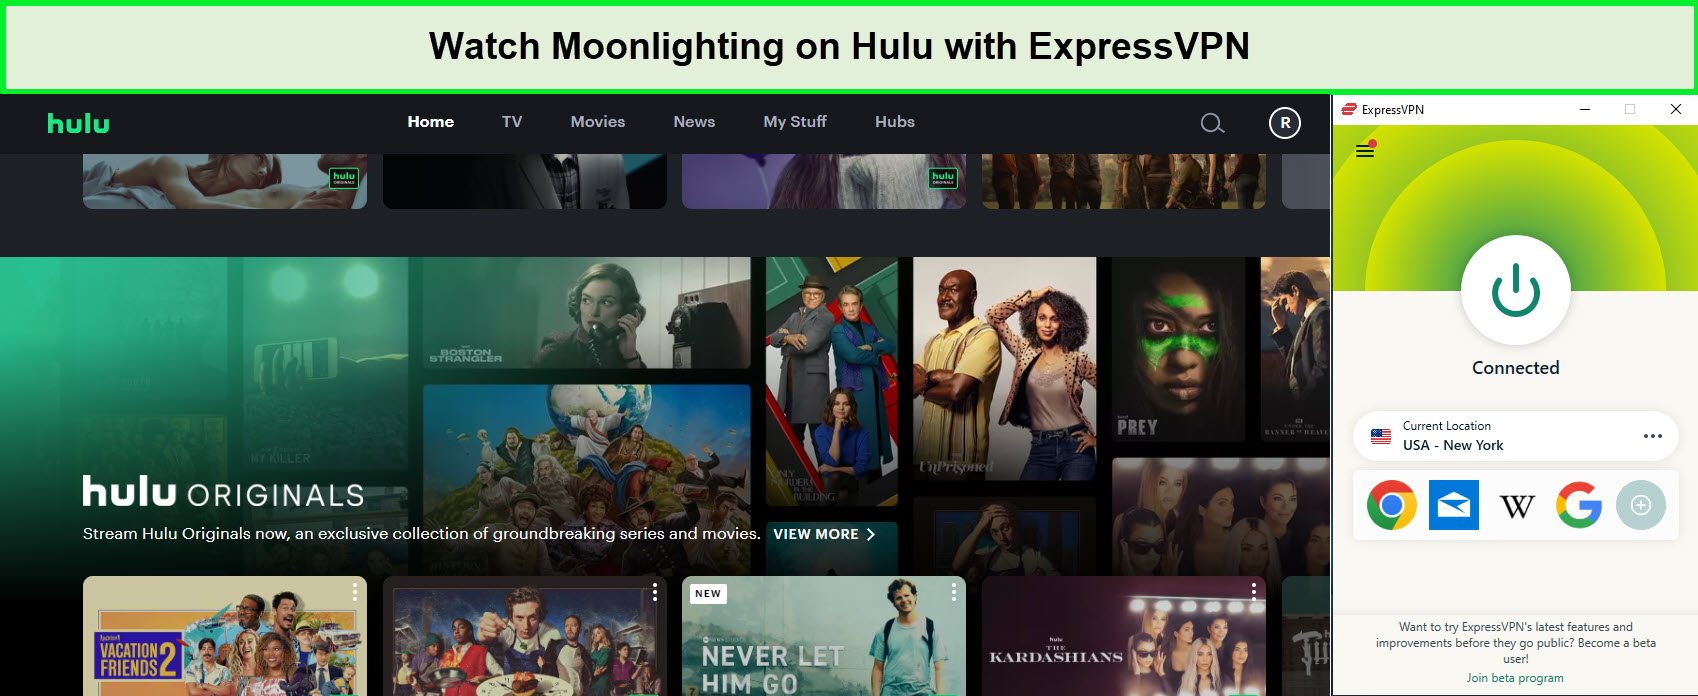 Watch-Moonlighting-in-Hong Kong-on-Hulu-with-ExpressVPN